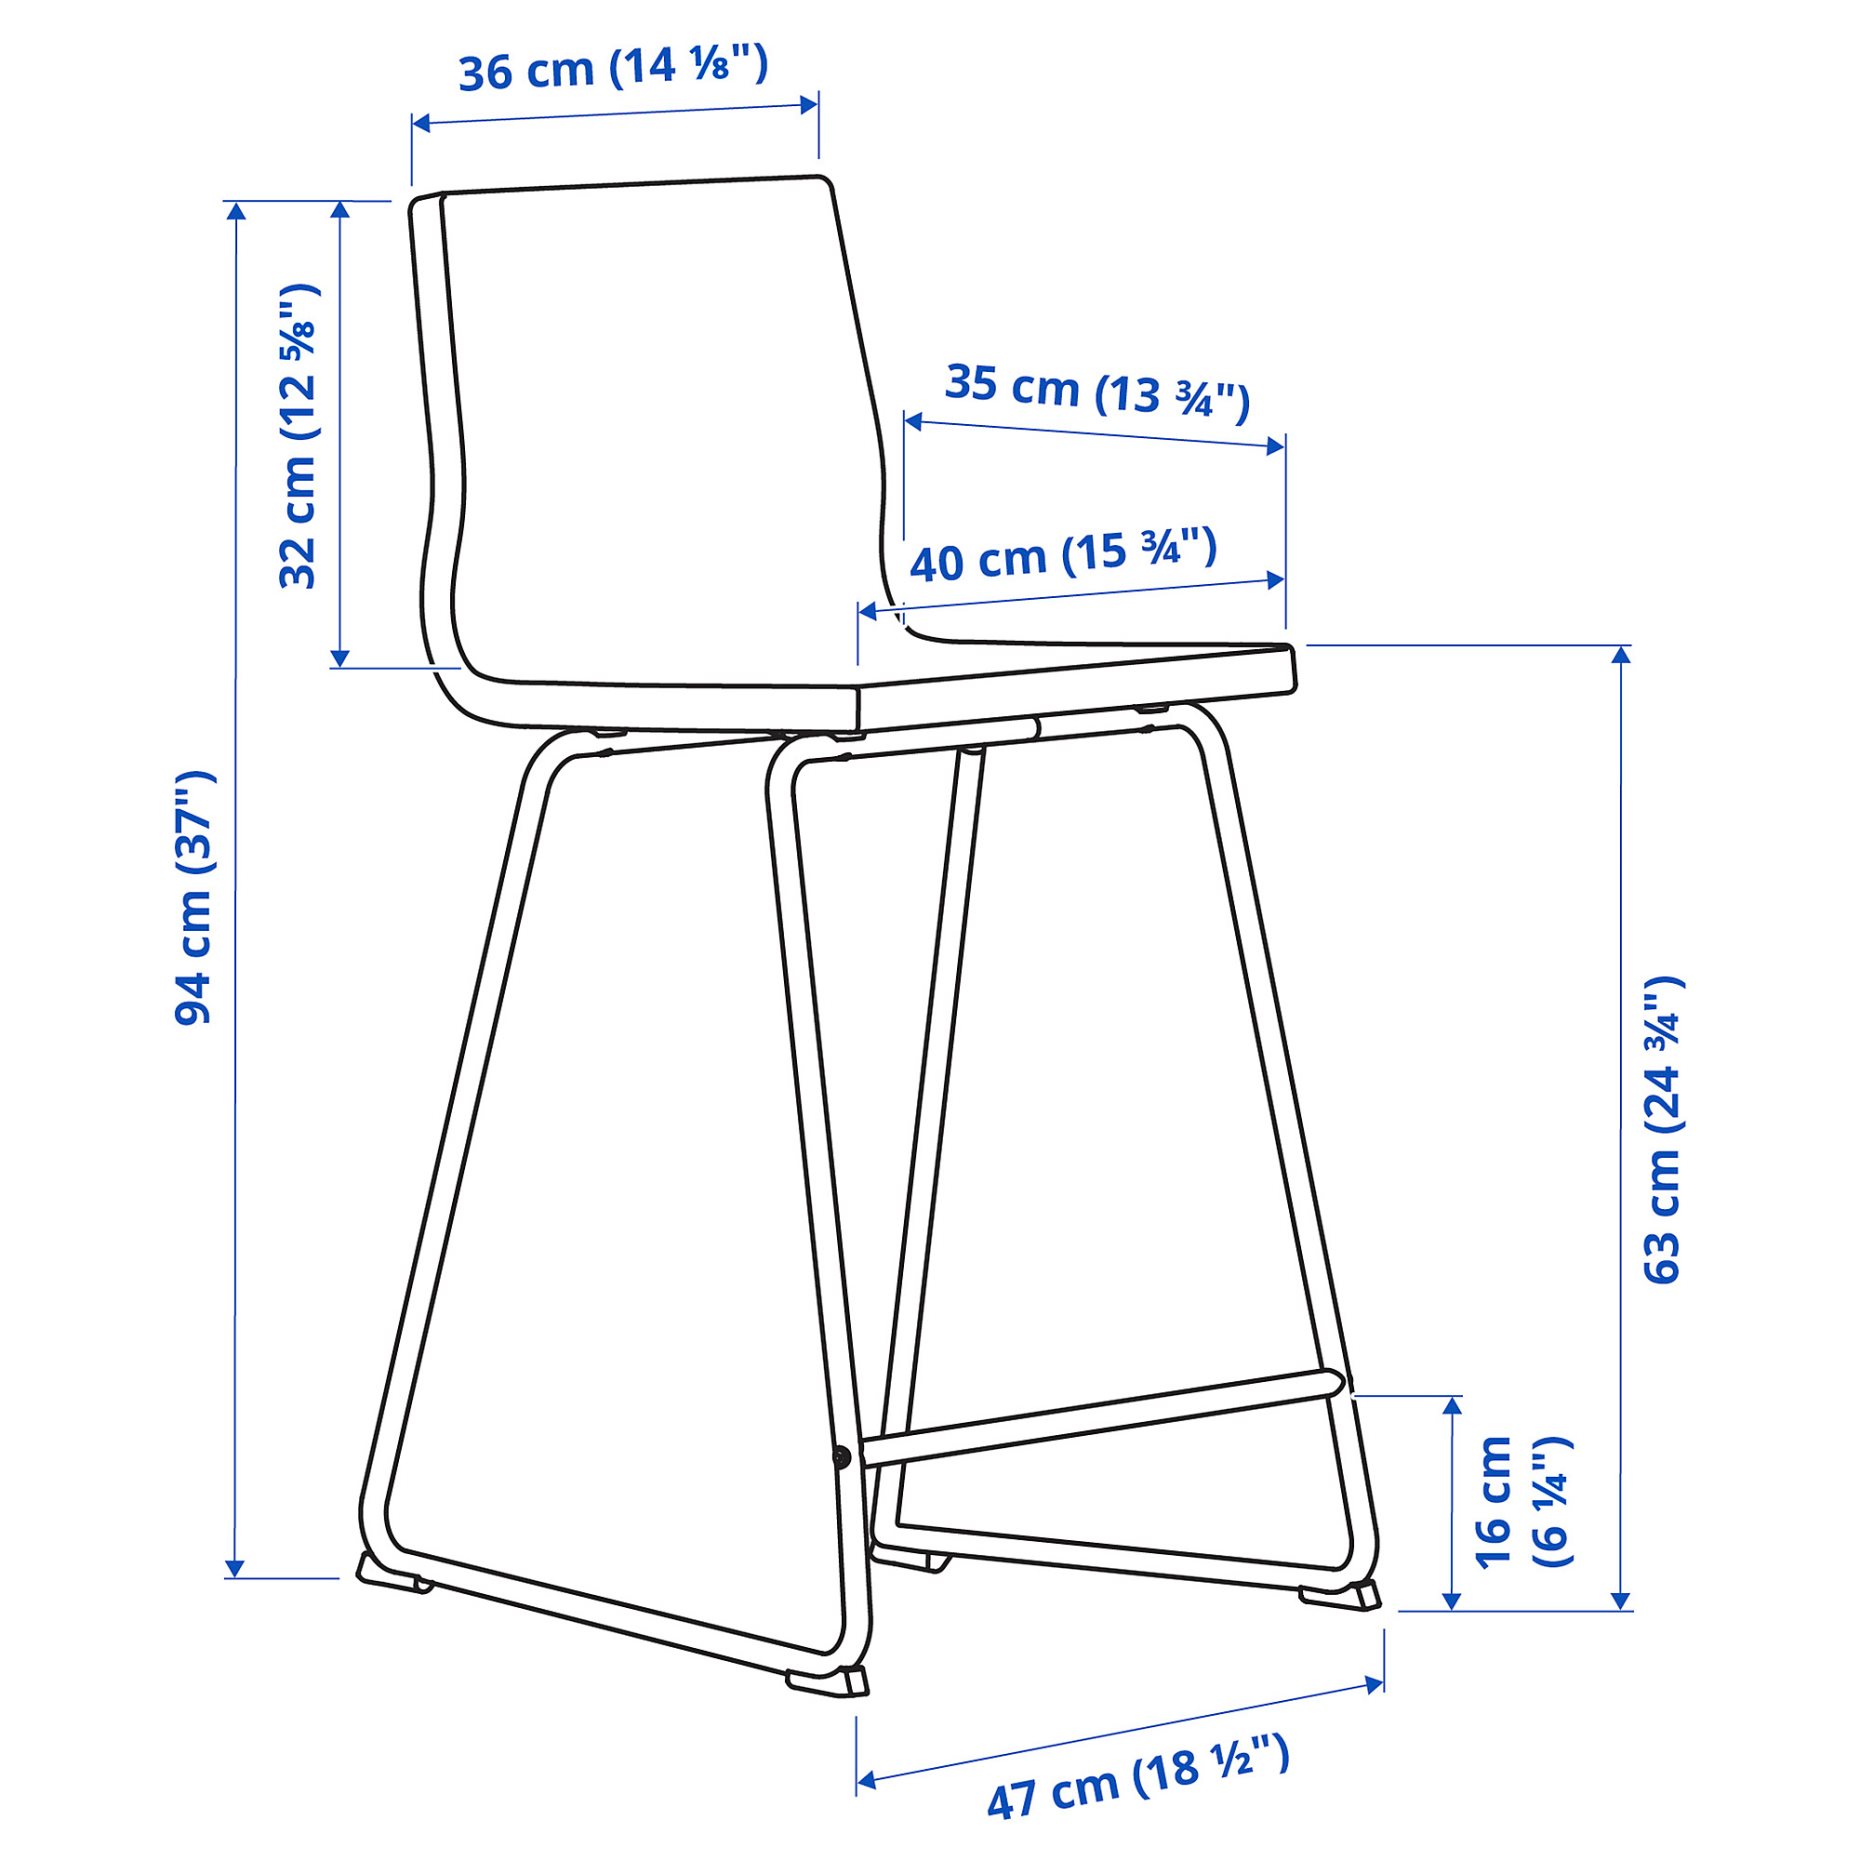 LILLÅNÄS, bar stool, 63 cm, 905.347.91